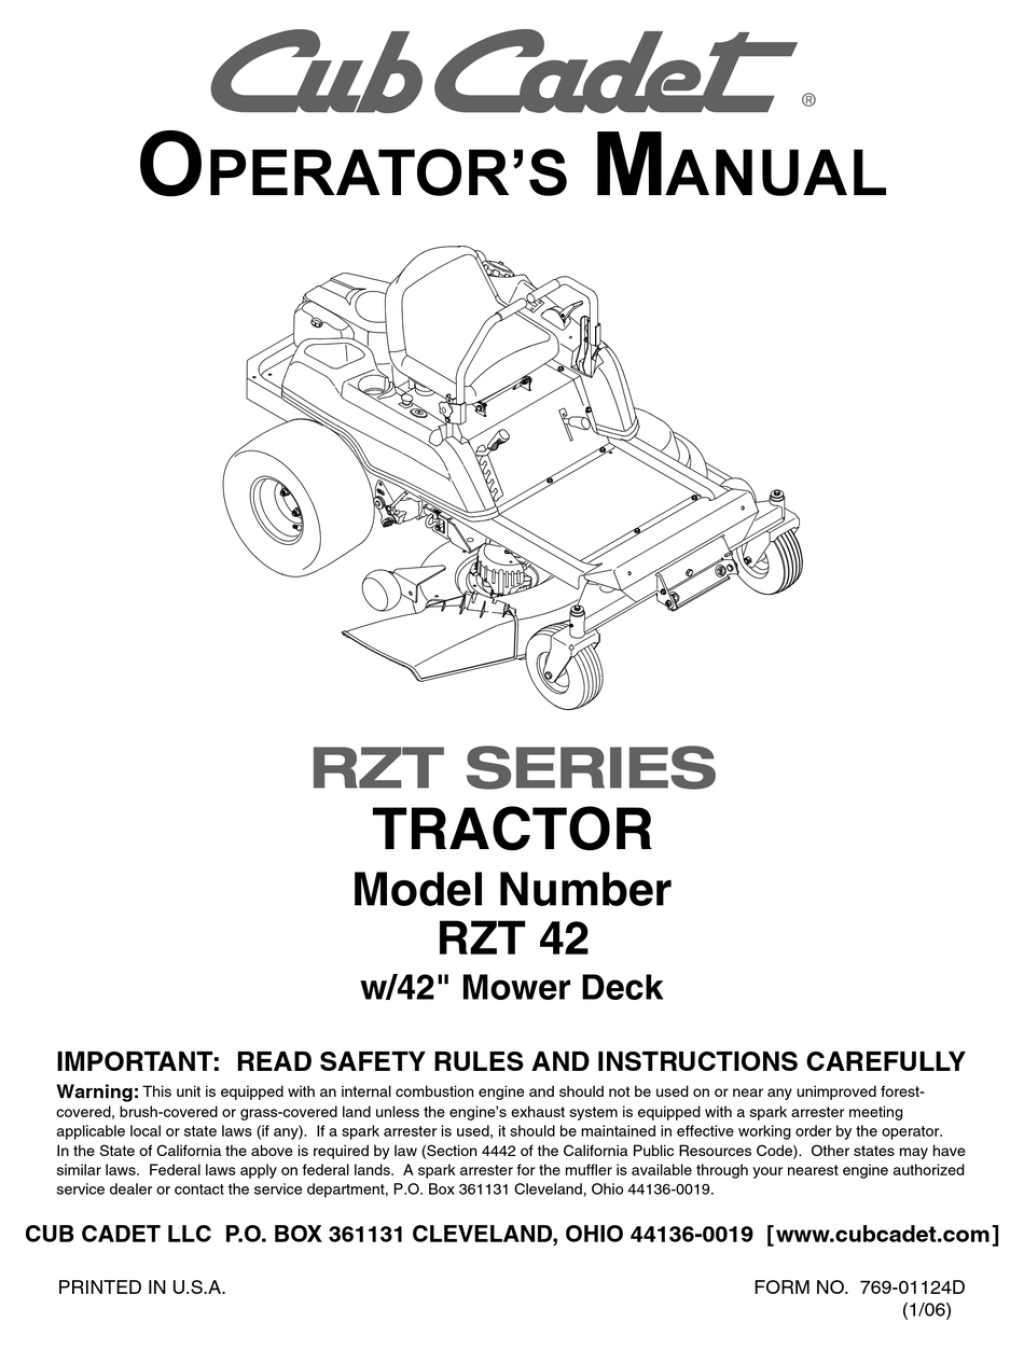 Picture of: CUB CADET RZT  OPERATOR’S MANUAL Pdf Download  ManualsLib